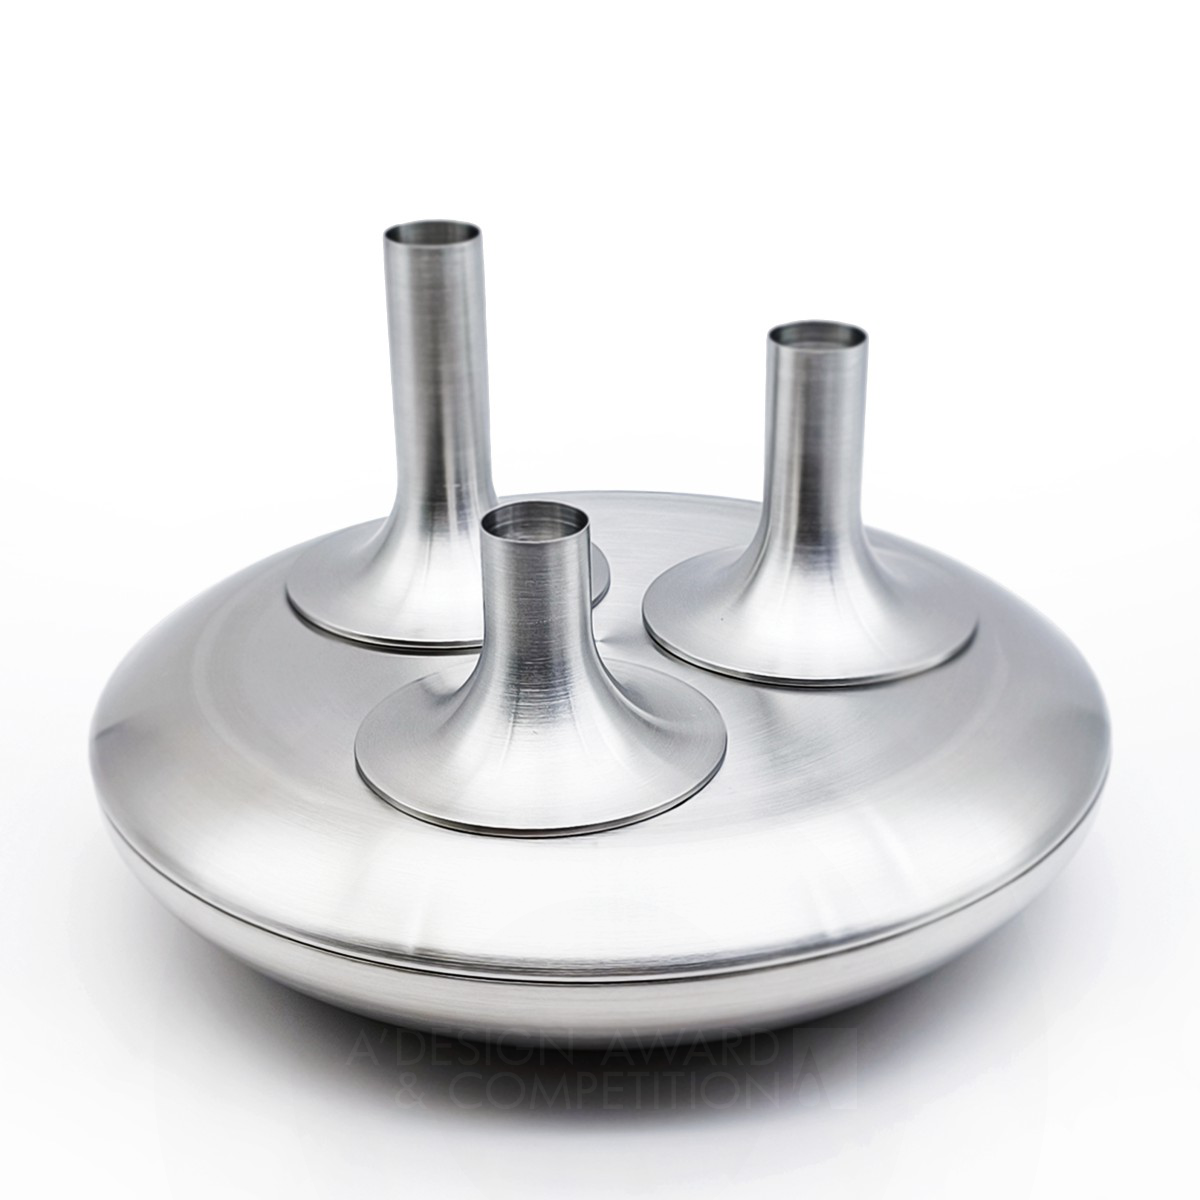 Utospace Stainless Steel Candleholder Set